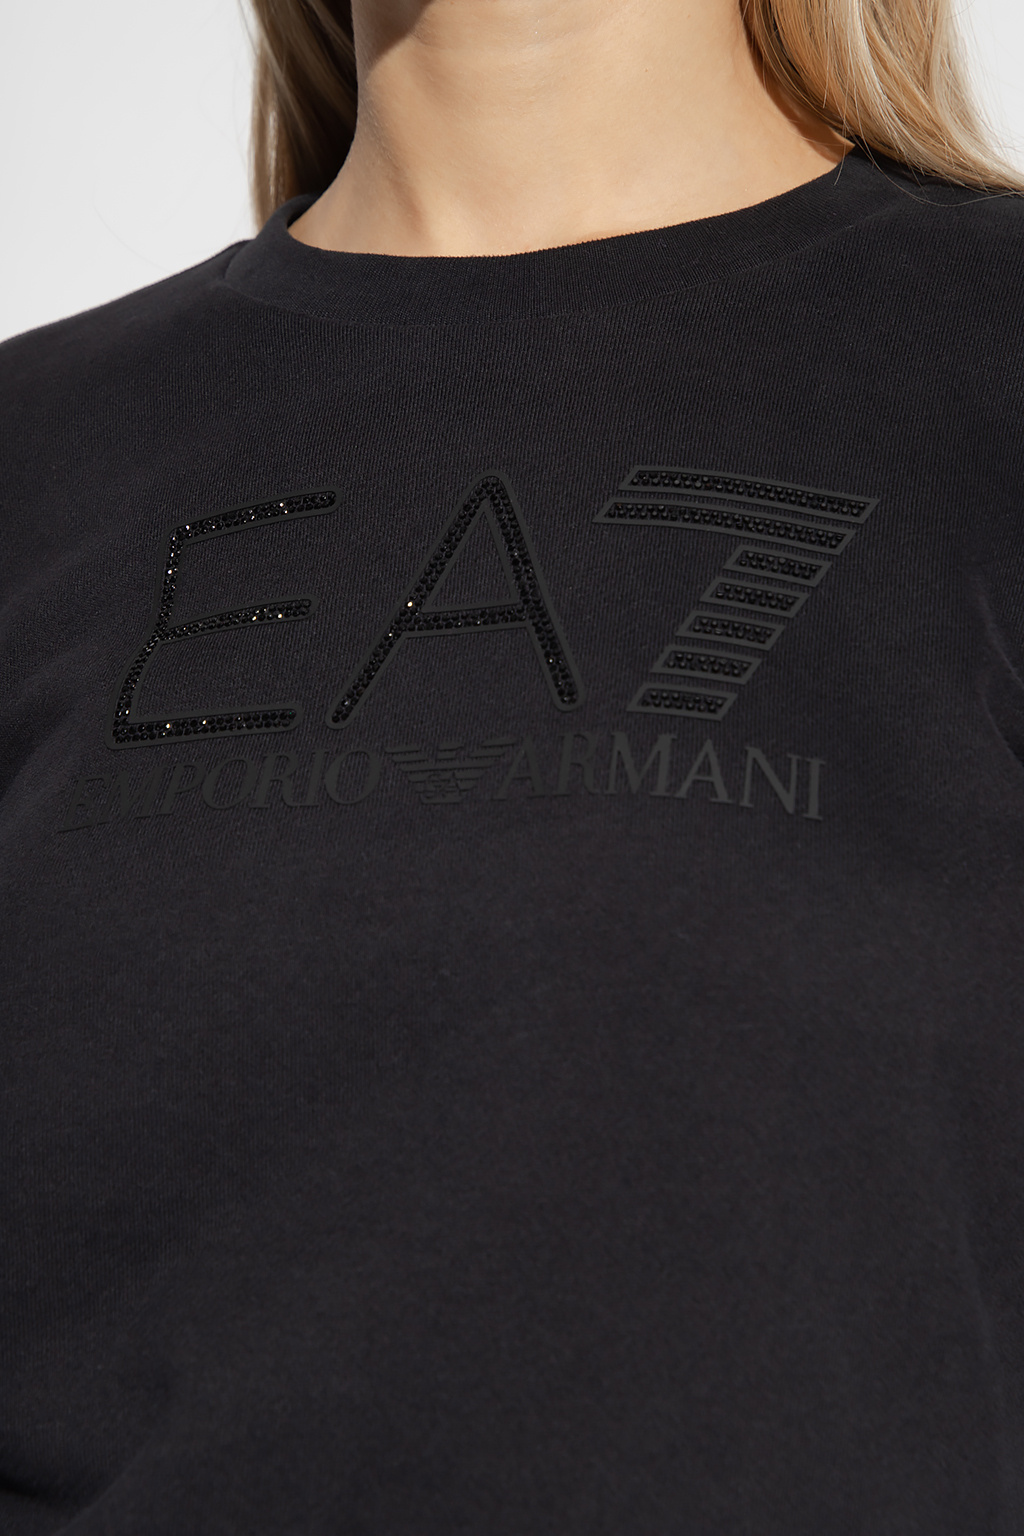 EA7 Emporio Armani Emporio Armani Kids embroidered-logo cotton sweatshirt